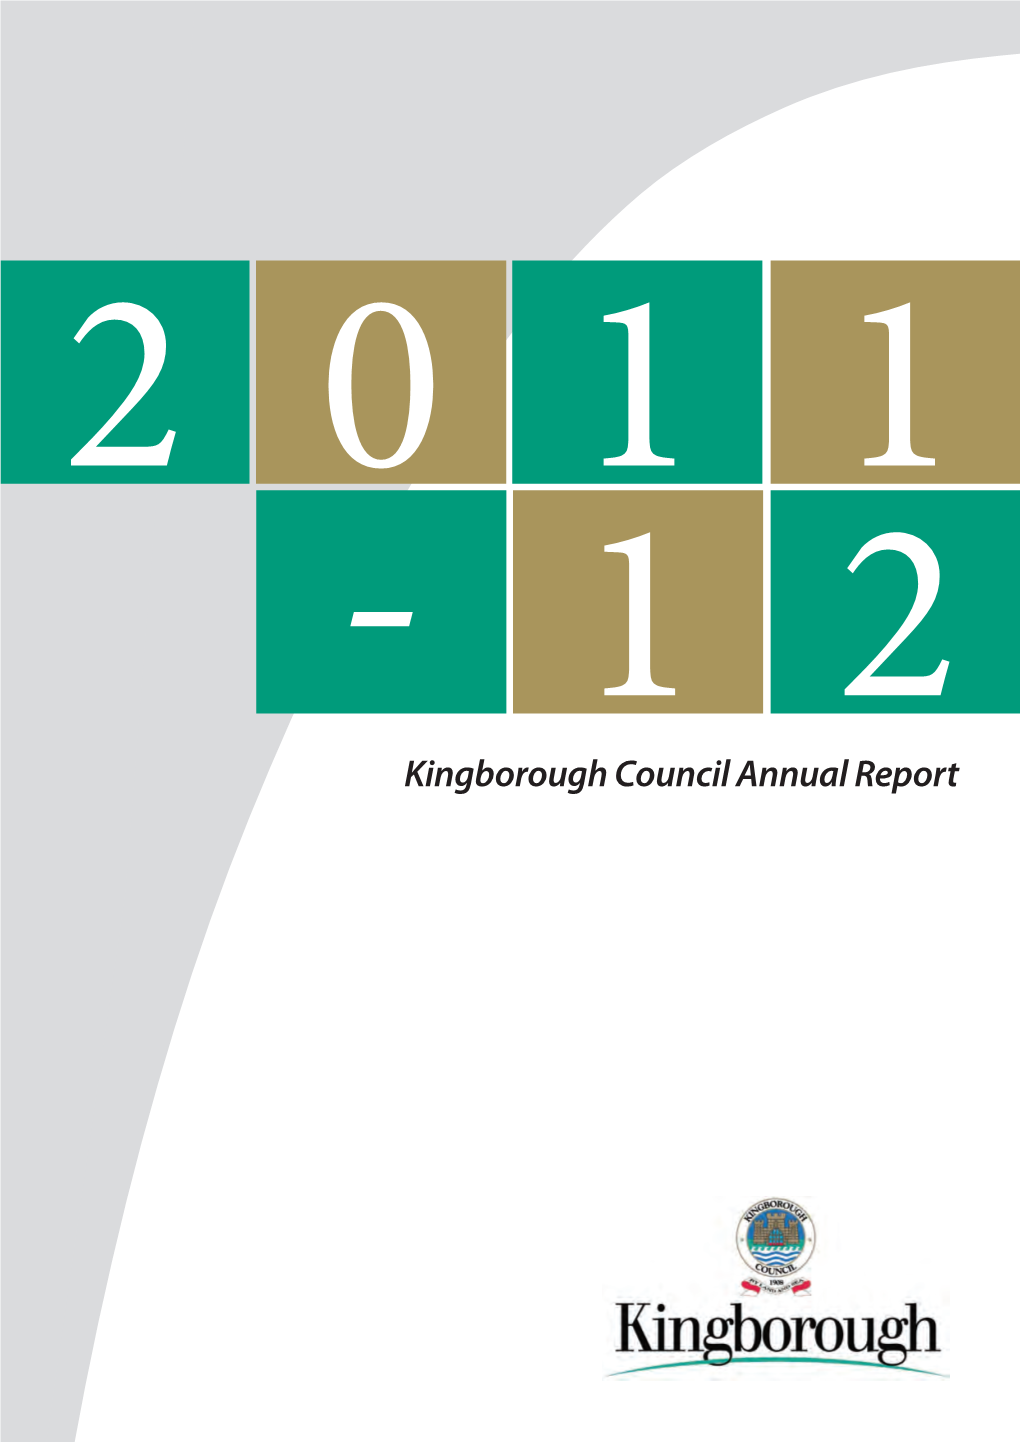 Kingborough Council Annual Report Contents